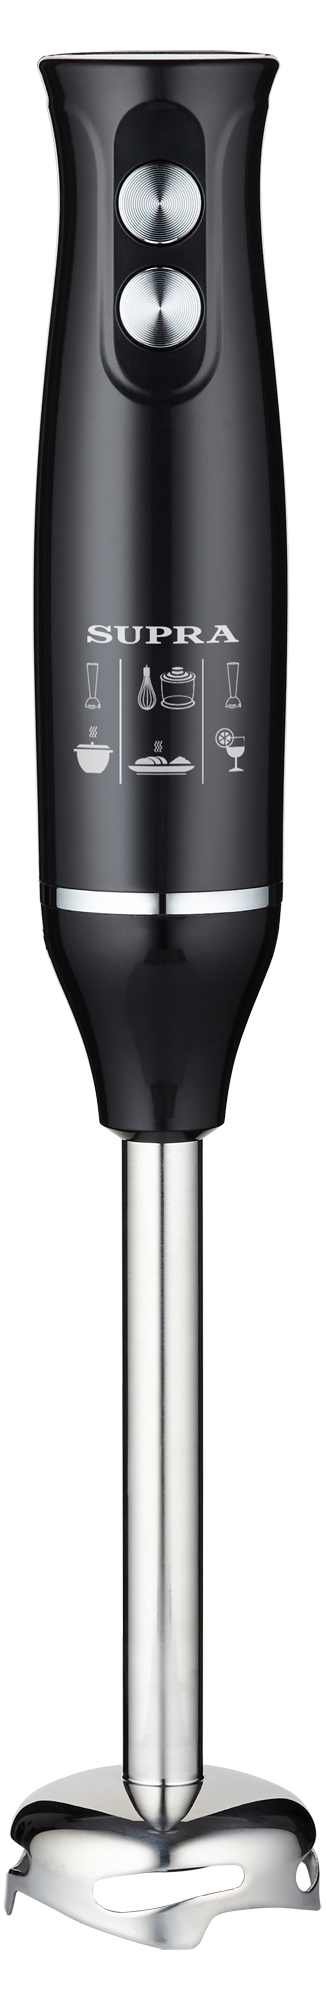 Блендер Supra HBS-832S черный 800 Вт, 2 скор